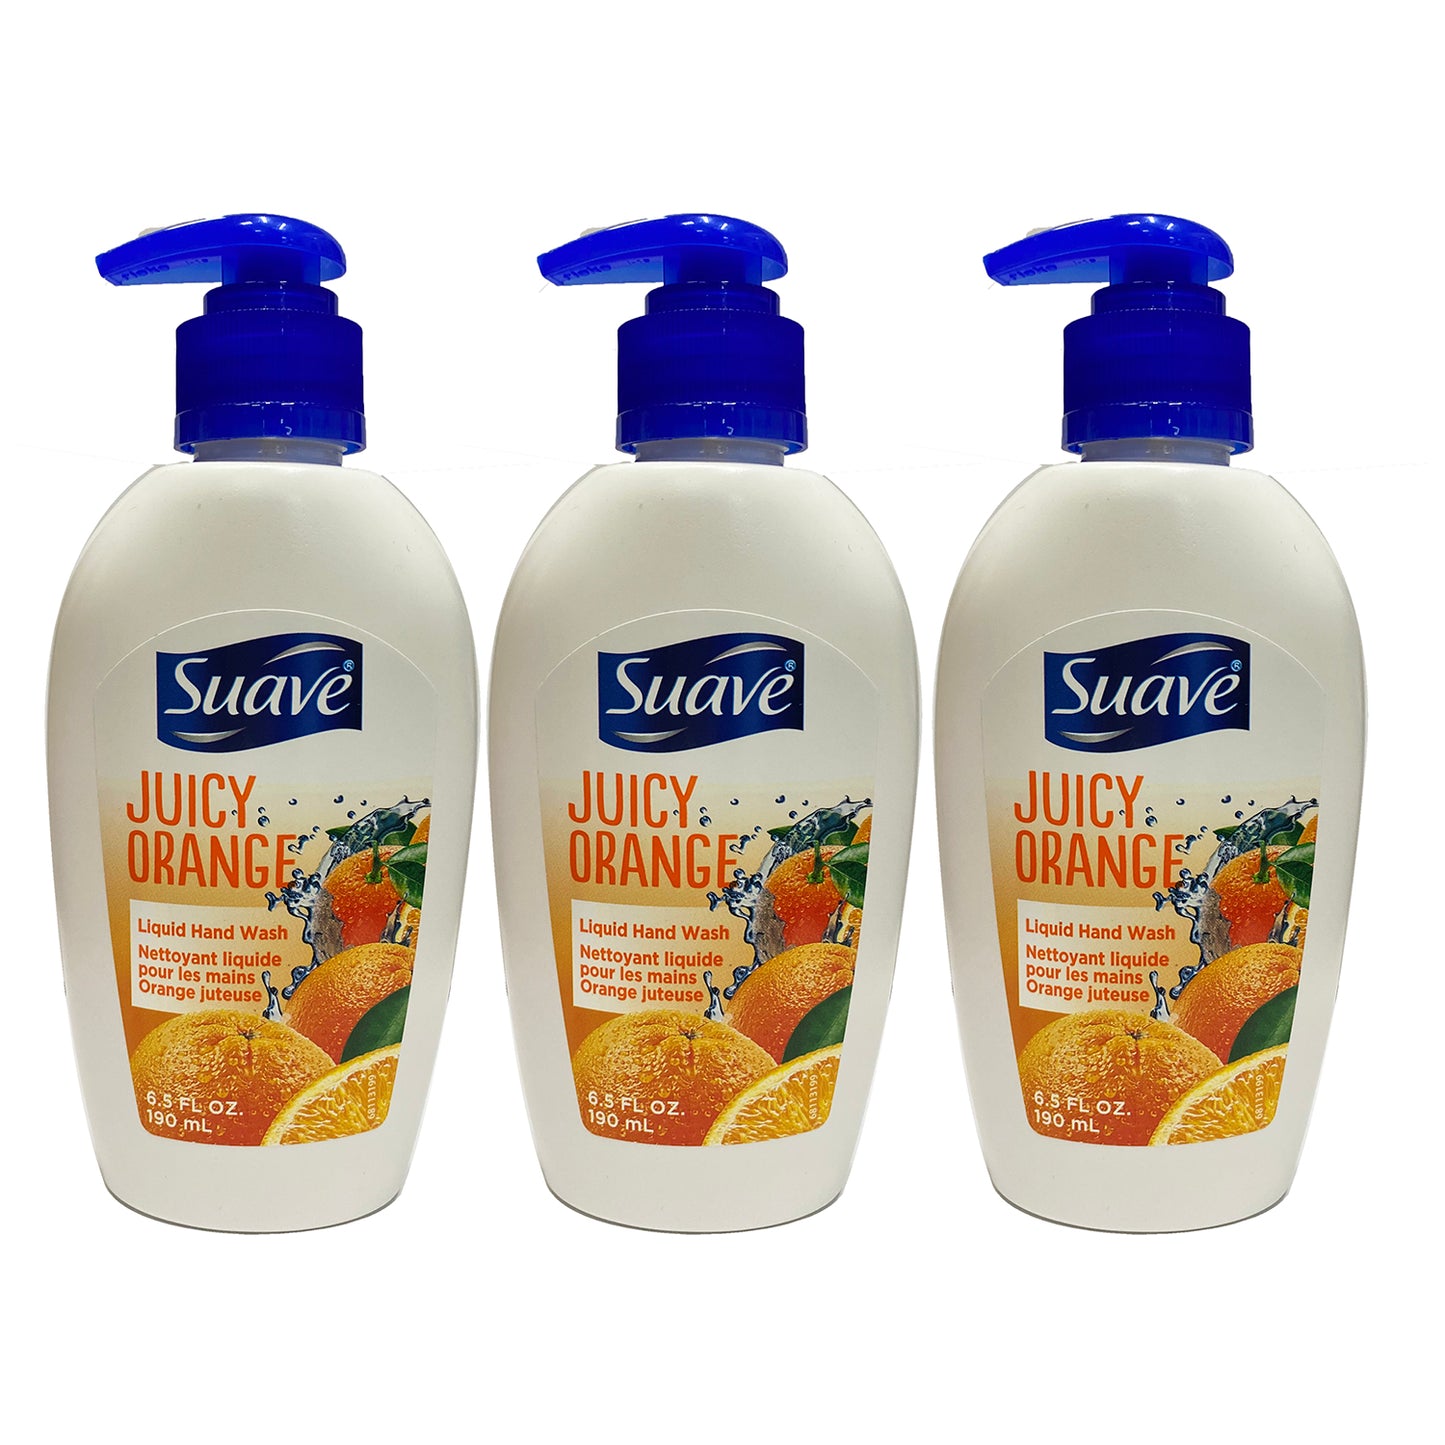 Suave Juicy Orange Liquid Hand Wash Soap 6.5 oz "3-PACK"